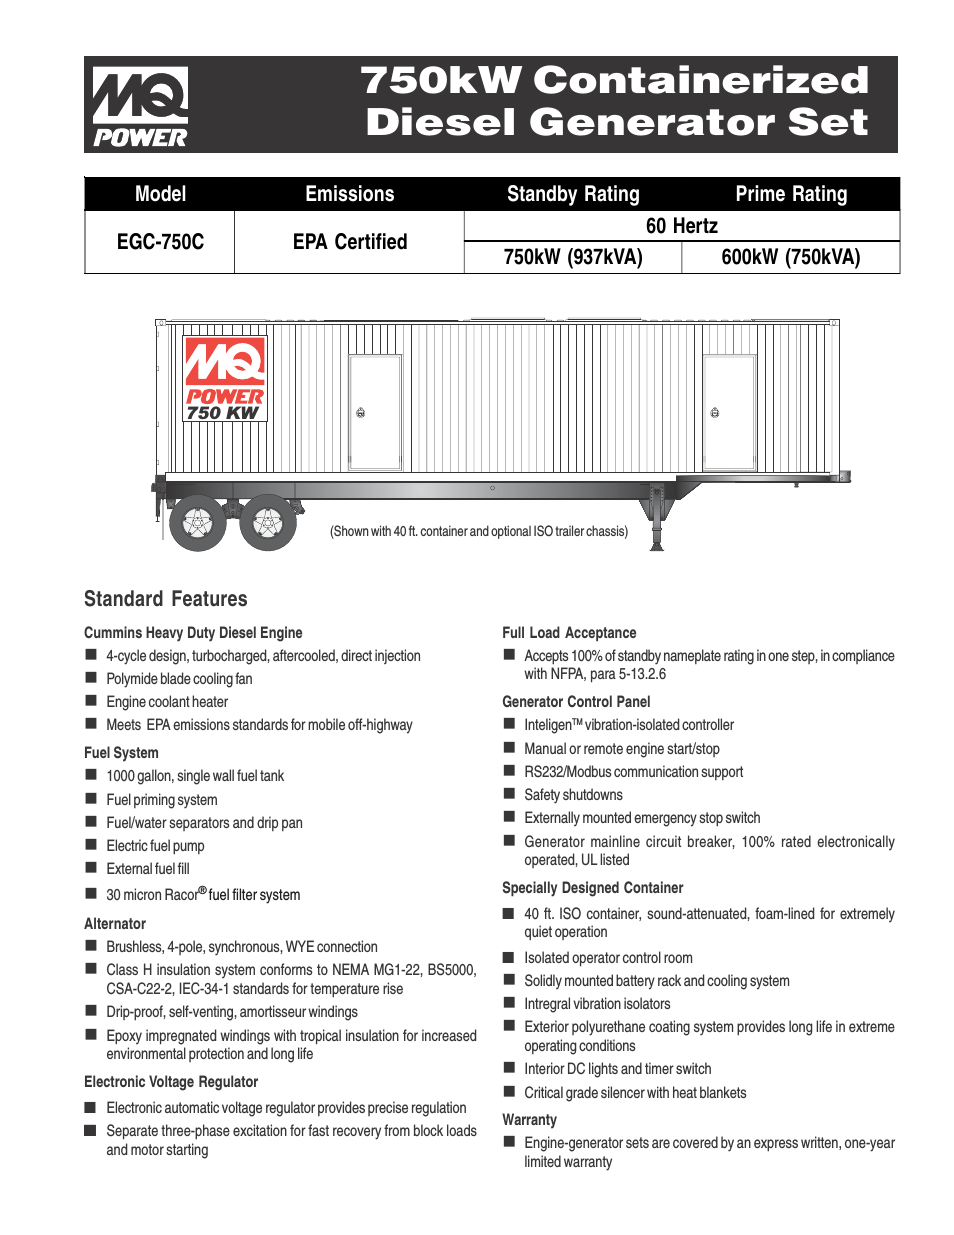 750kW Containerized Diesel Generator Set EGC-750C